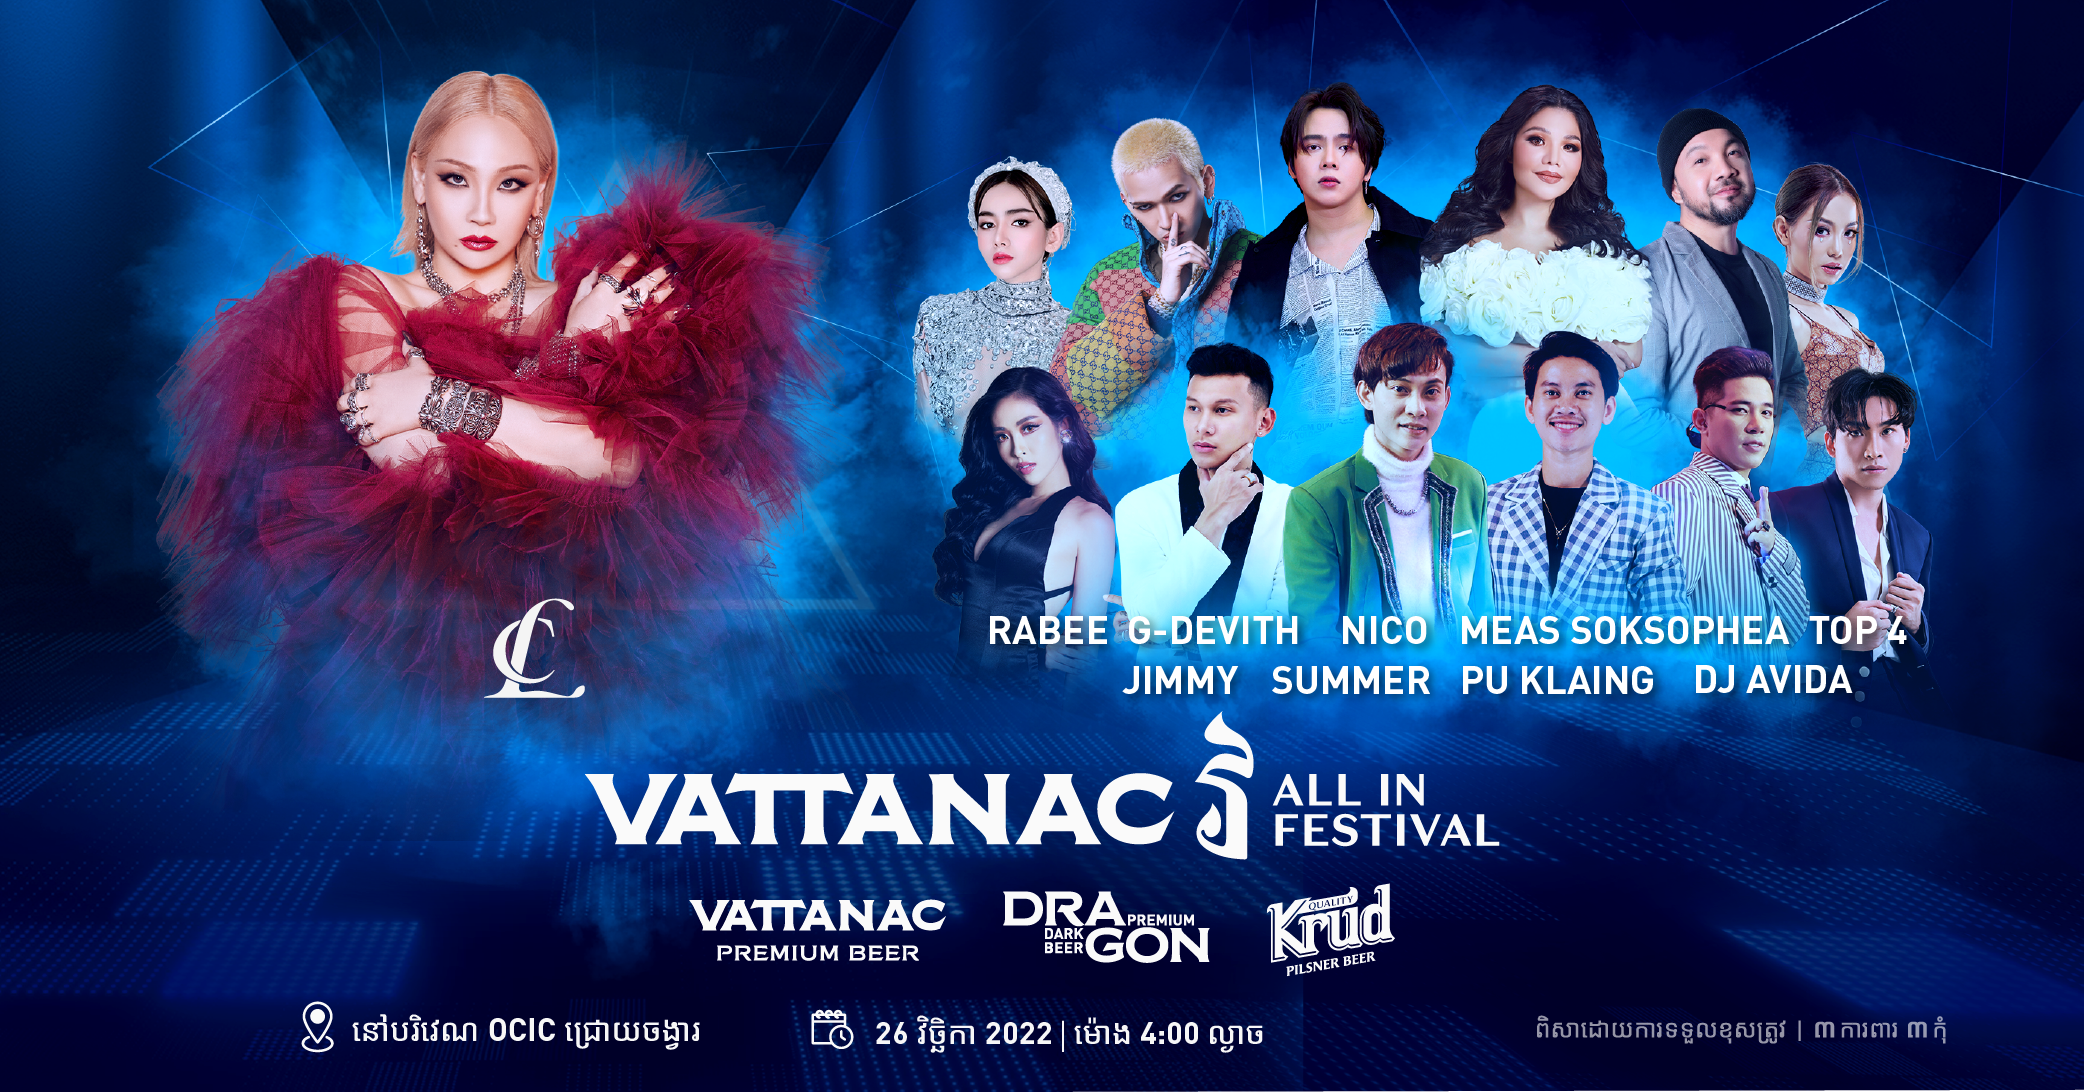 CL និងកំពូលតារាចម្រៀងជាច្រើនប្រចាំប្រទេសកម្ពុជា នឹងមានវត្តមានក្នុងព្រឹត្តិការណ៍ដ៏ធំ Vattanac វ All in Festival នាចុងខែវិច្ឆិកានេ